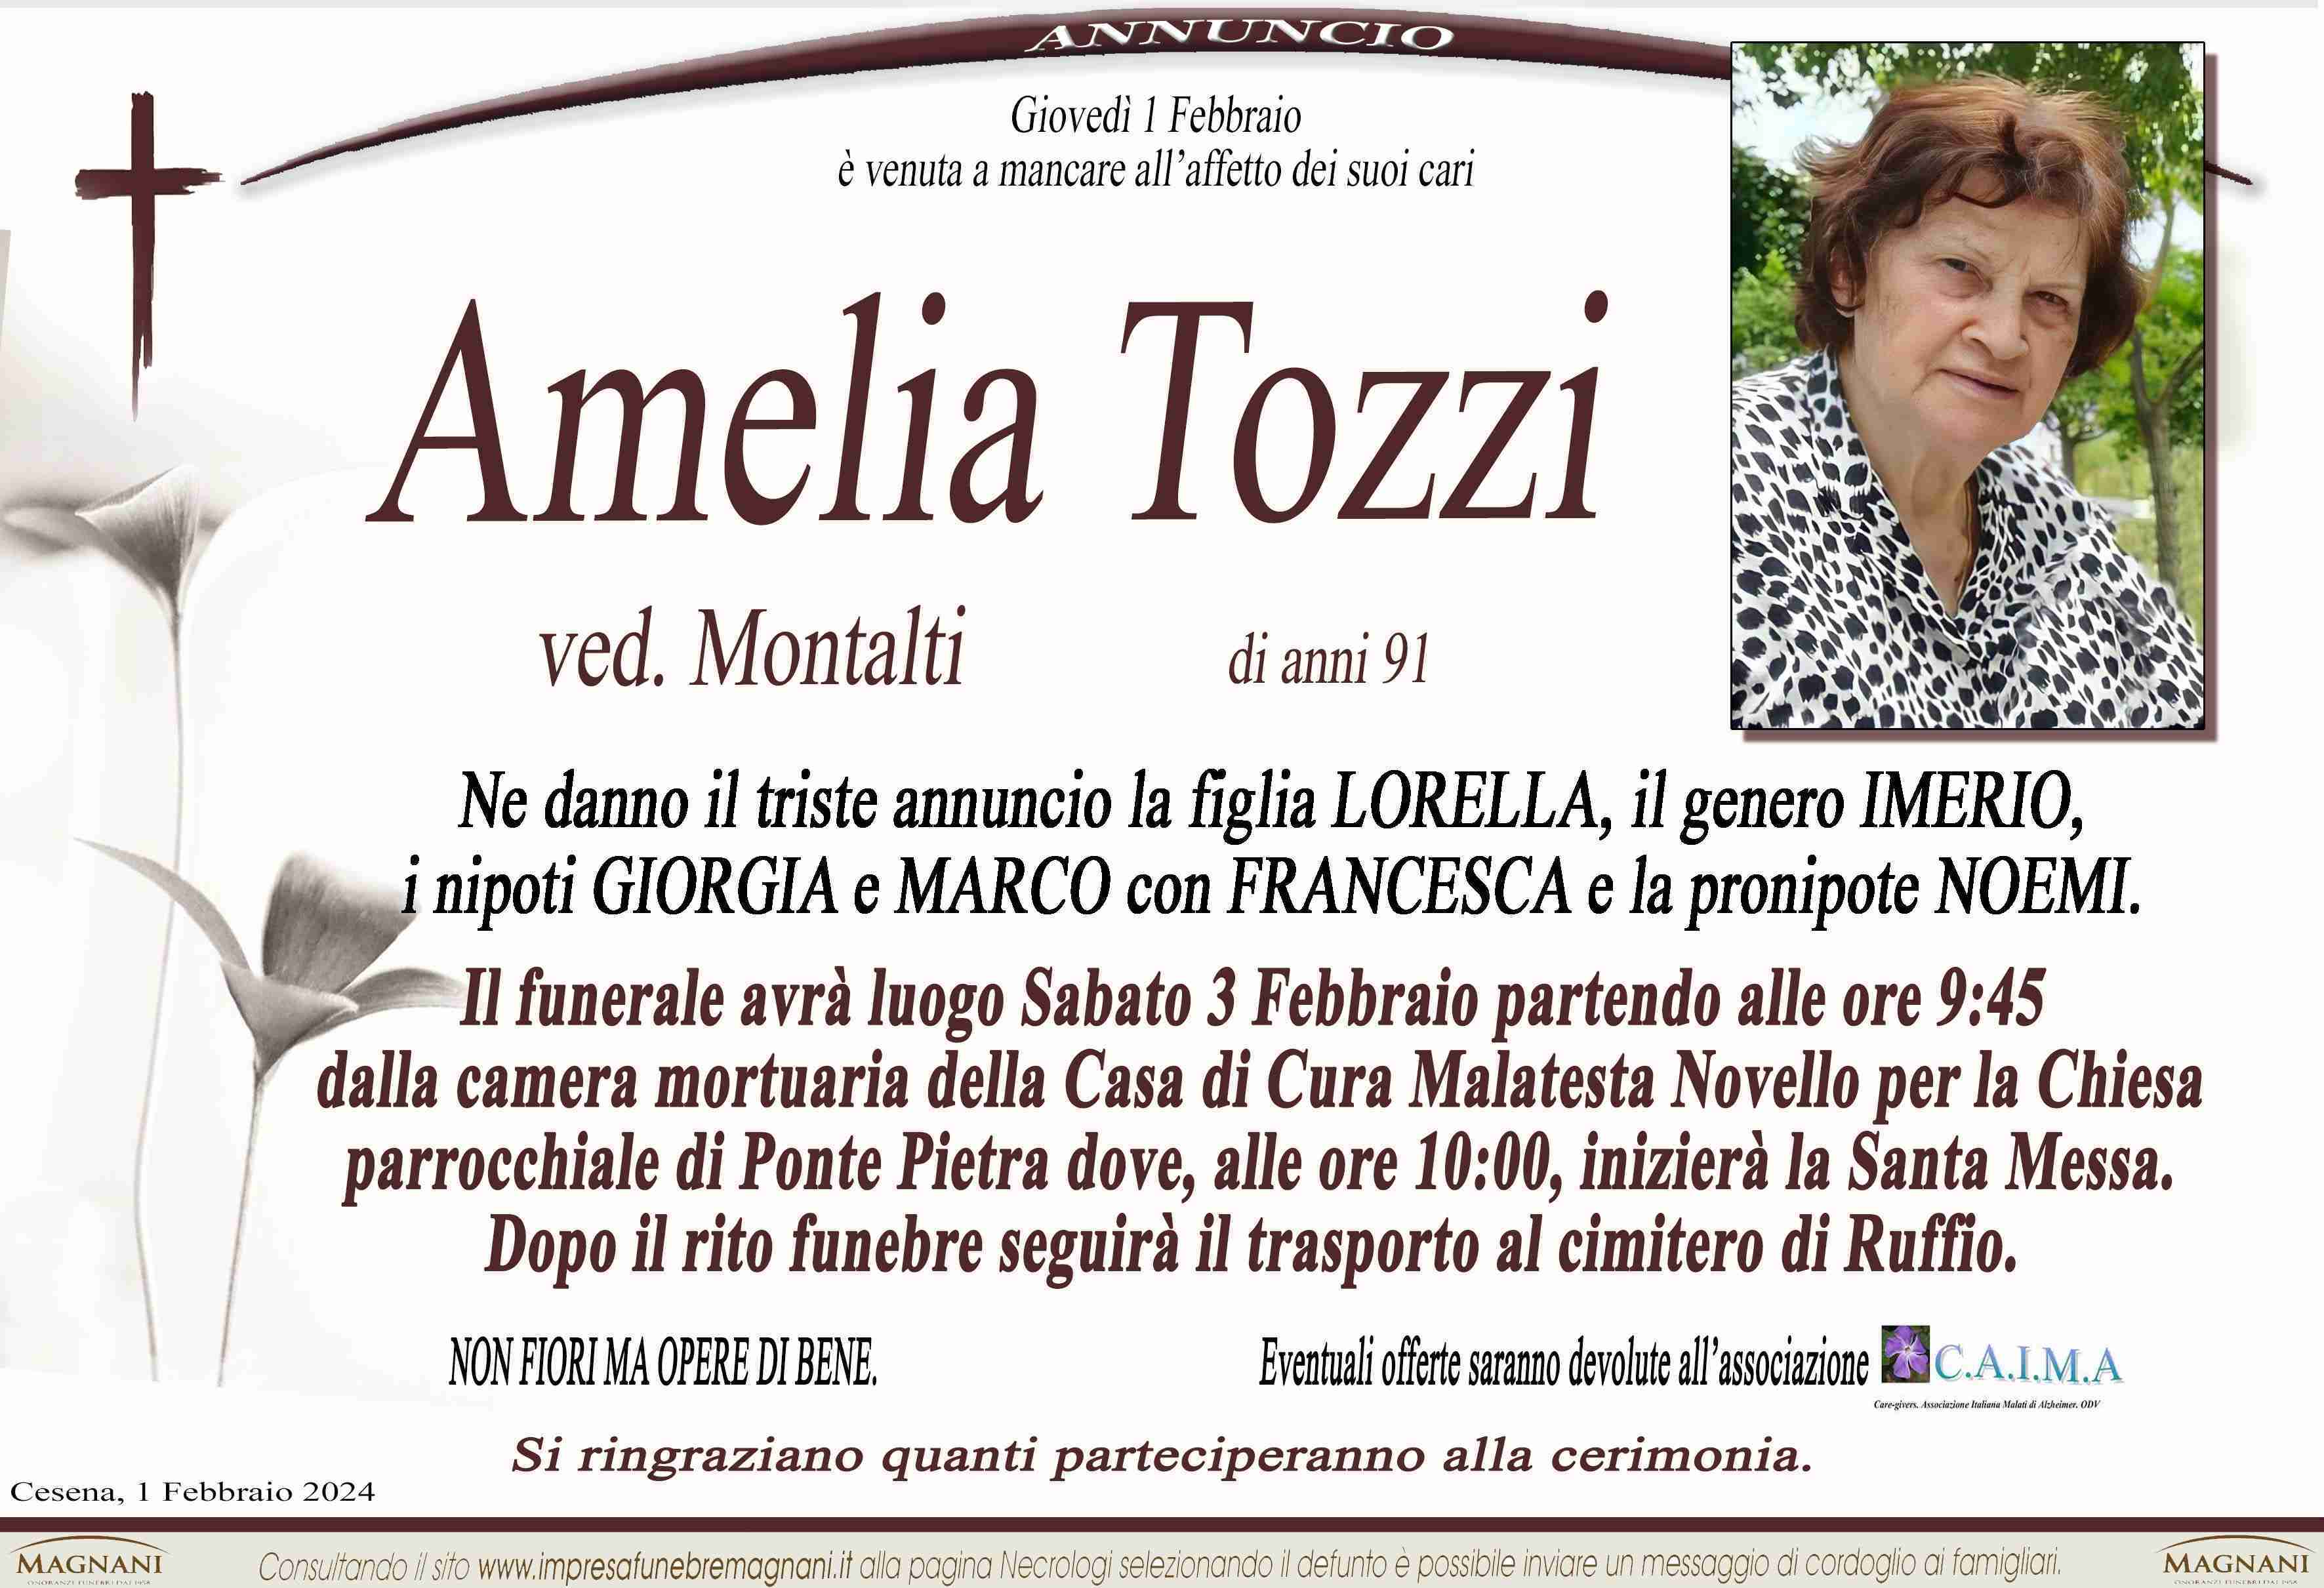 Amelia Tozzi